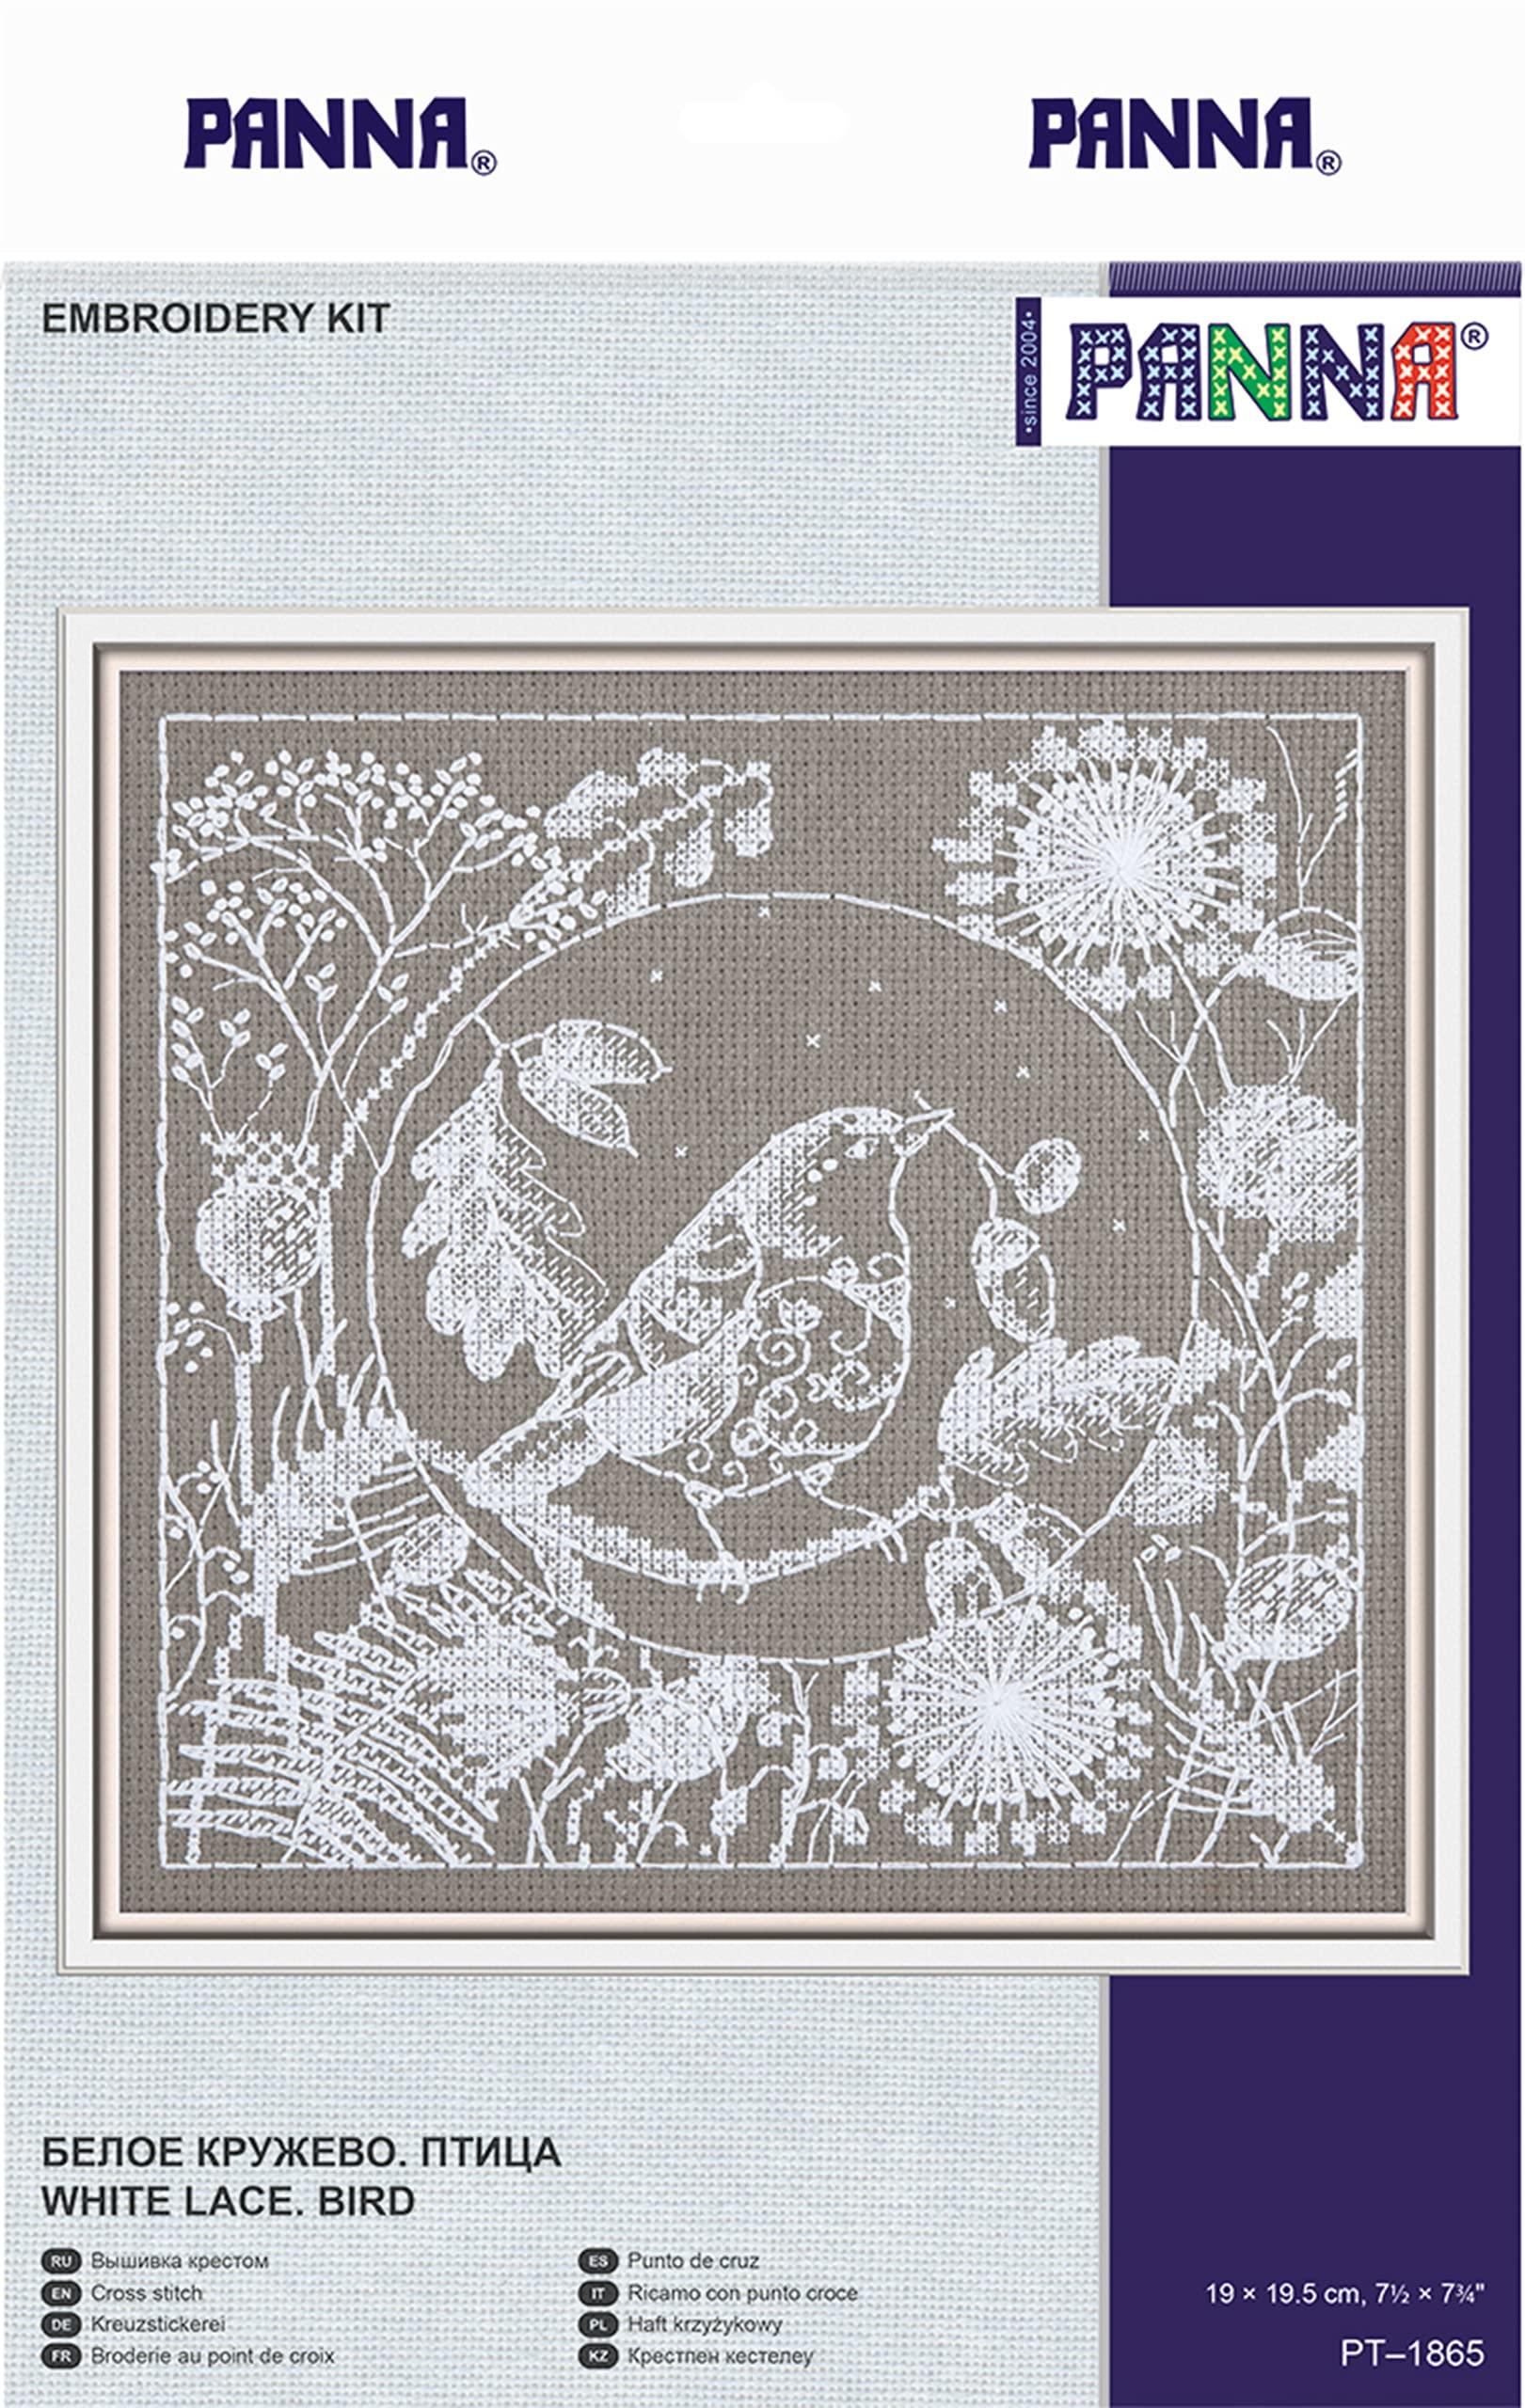 PANNA - Counted Cross Stitch Kit - White Lace. Bird - PT-1865-16 Count - Aida - 7.68 x 7.48 inch - DIY kit